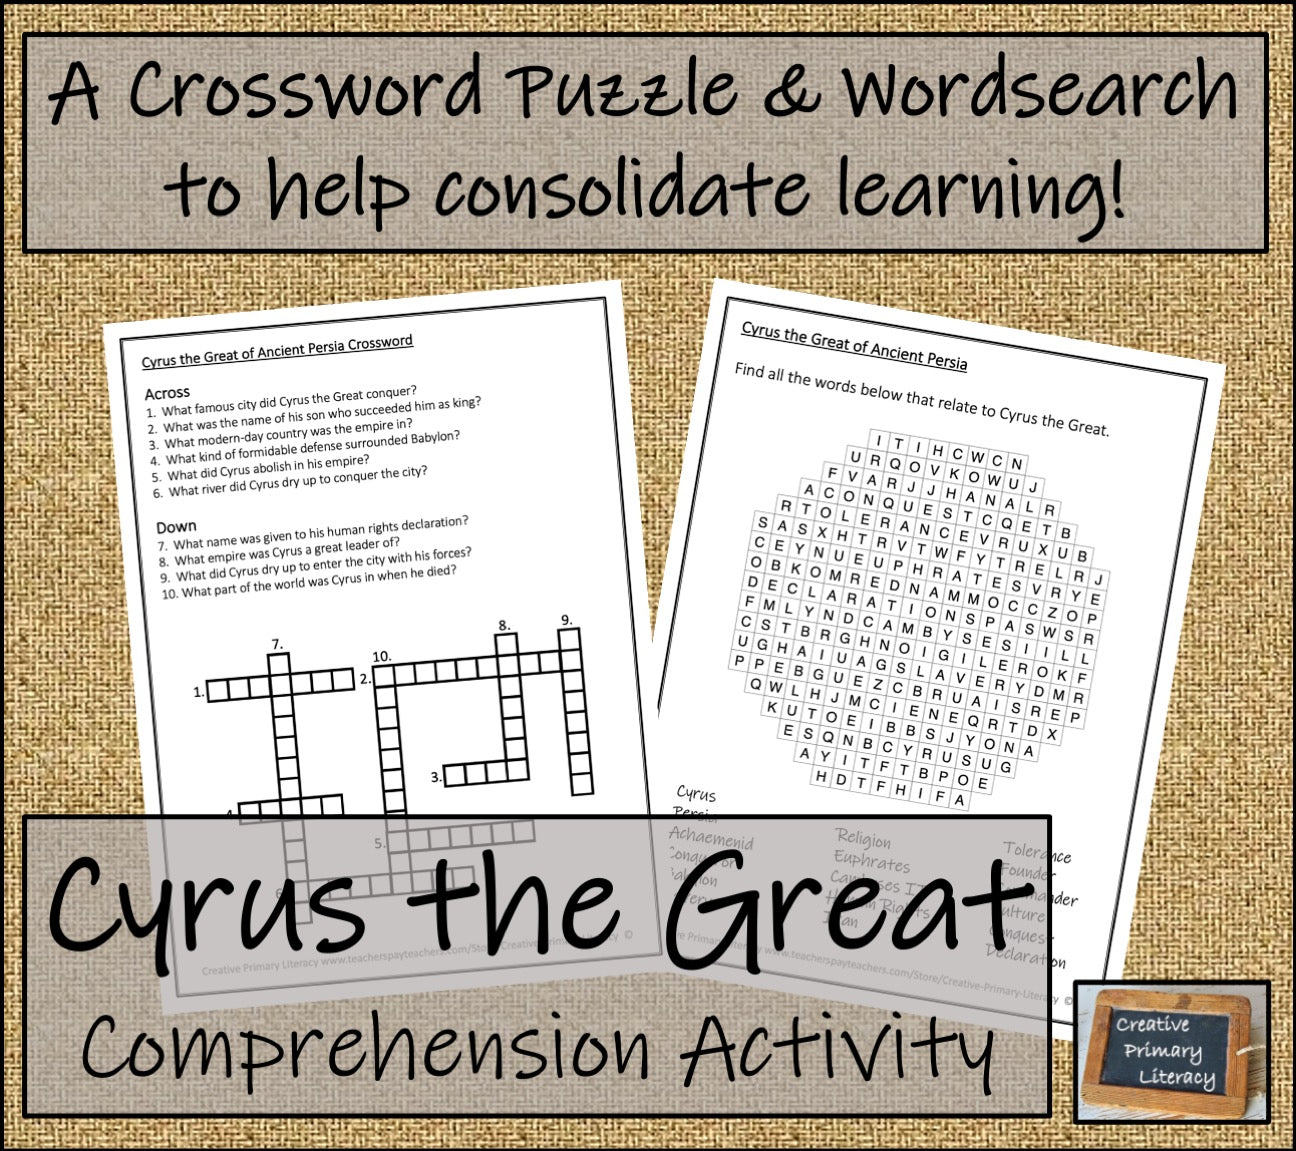 Cyrus the Great Biography Writing Unit | 5th Grade & 6th Grade